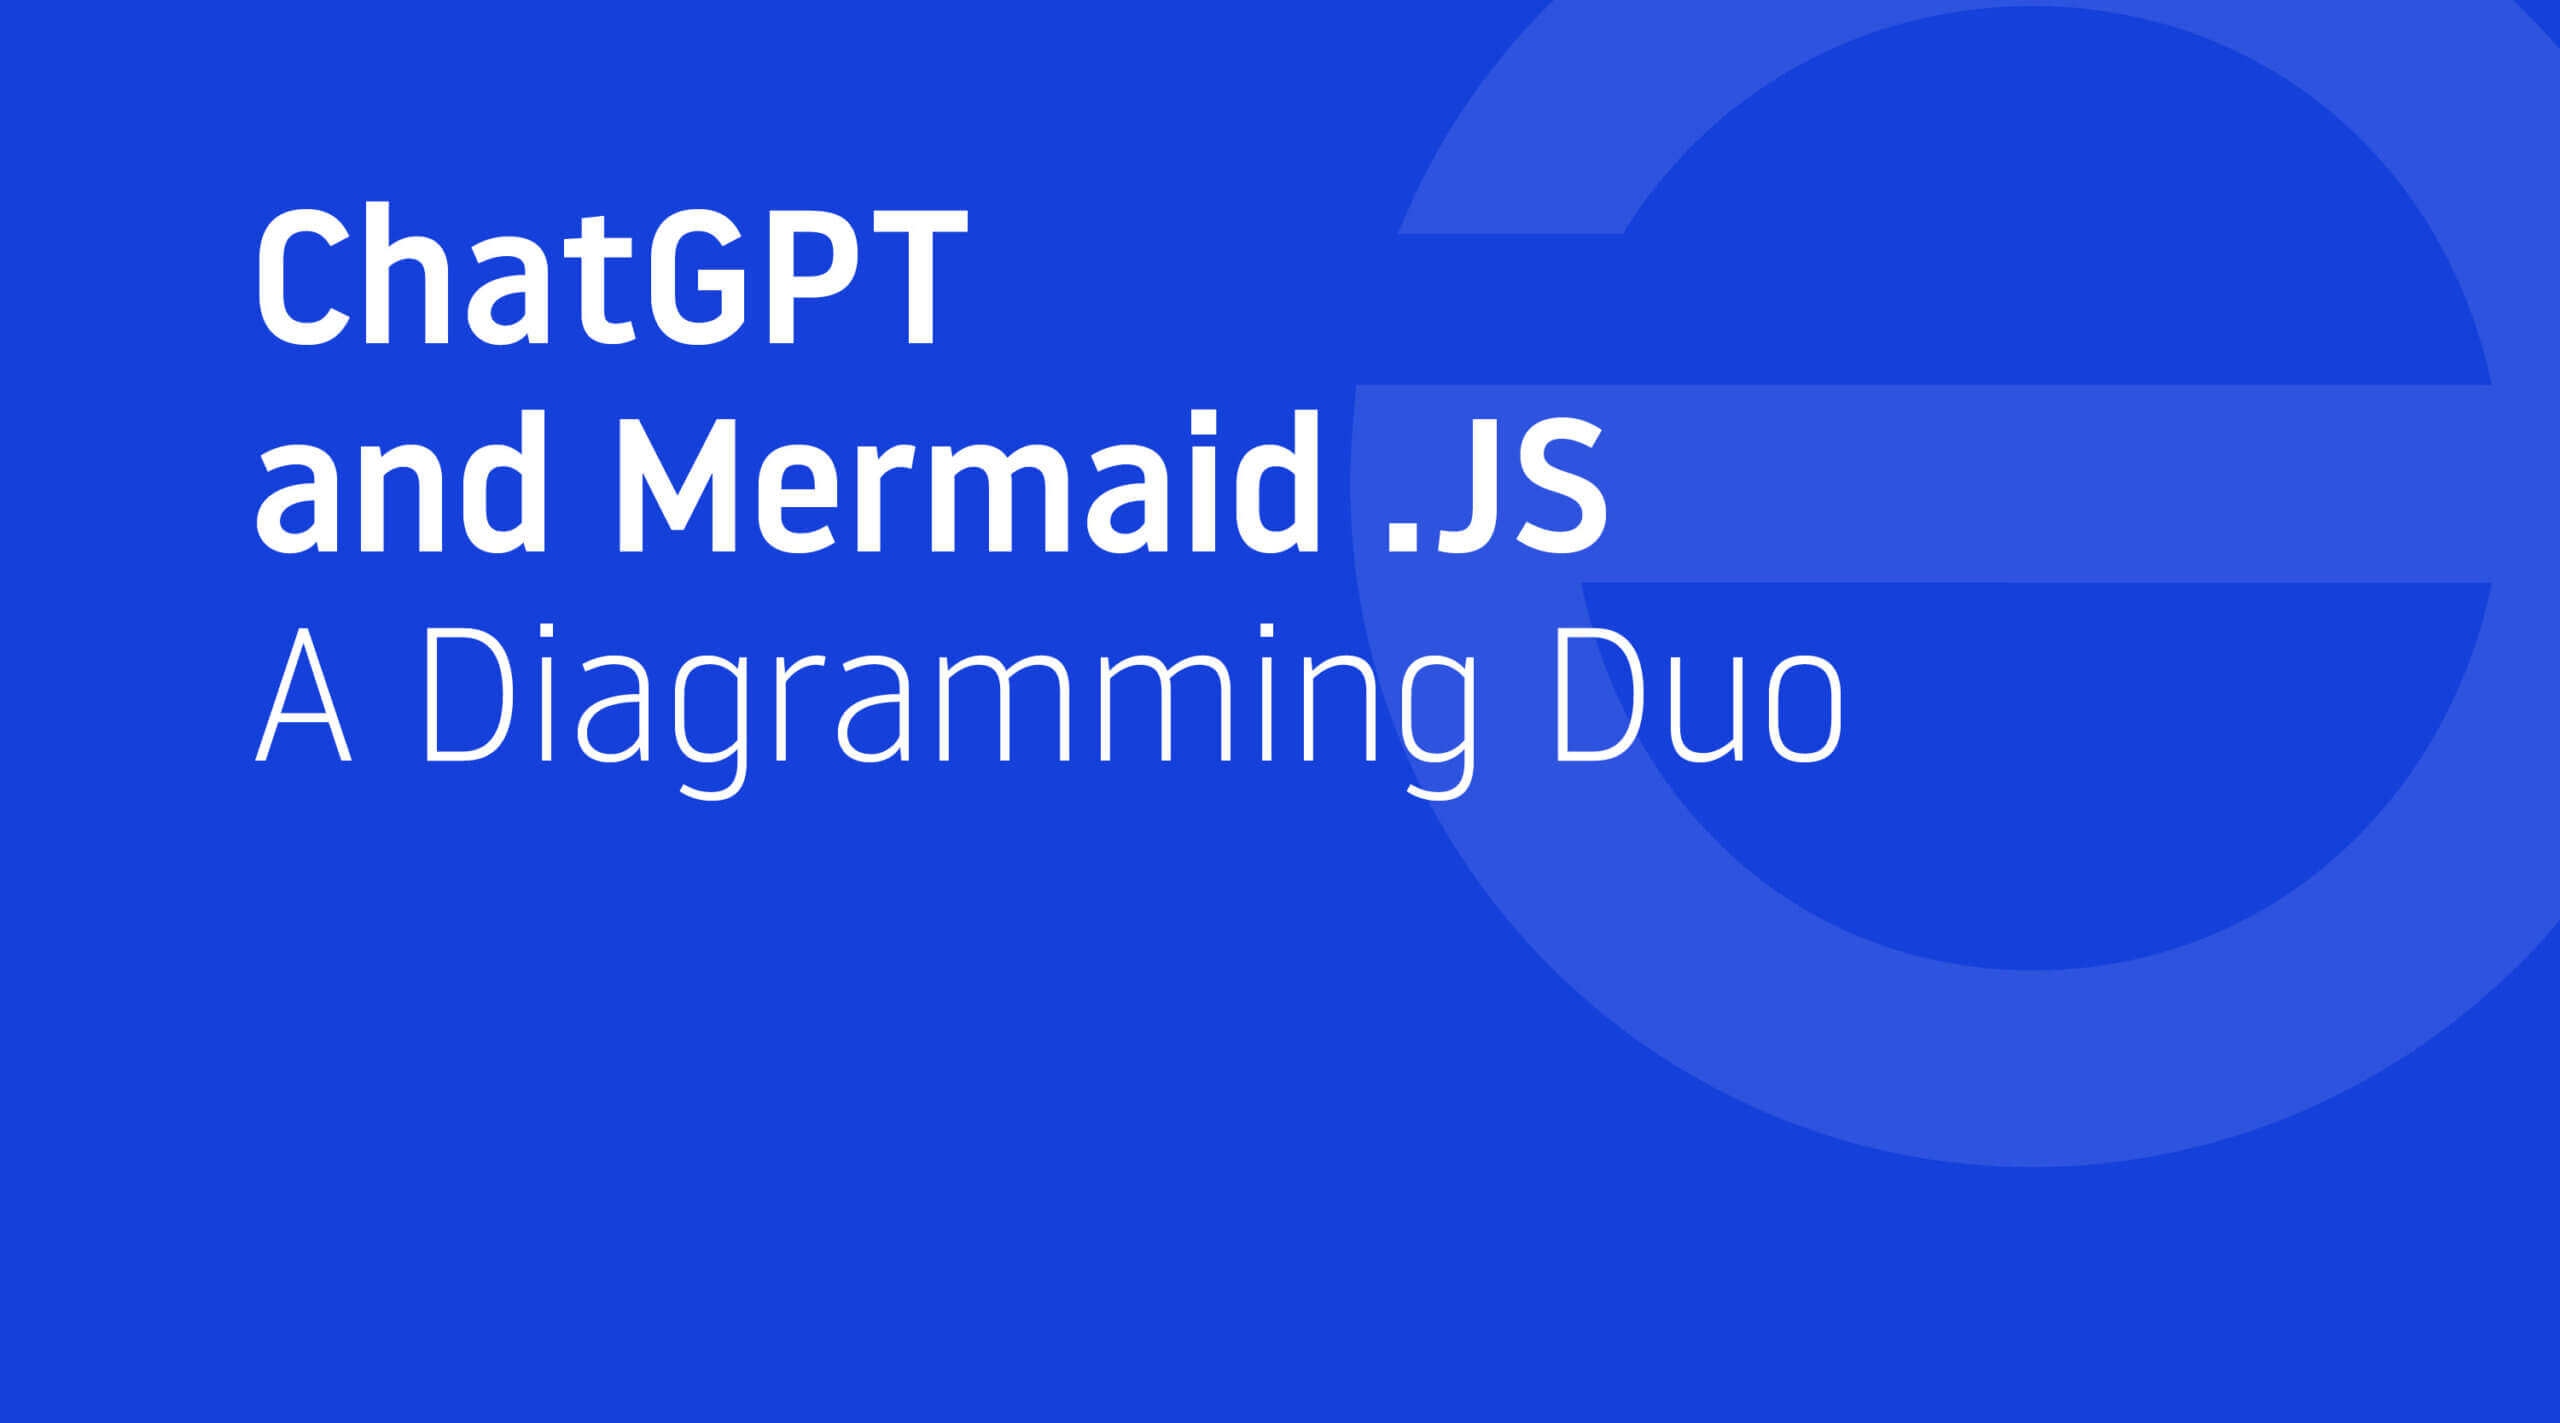 ChatGPT and Mermaid.JS - A Diagramming Duo